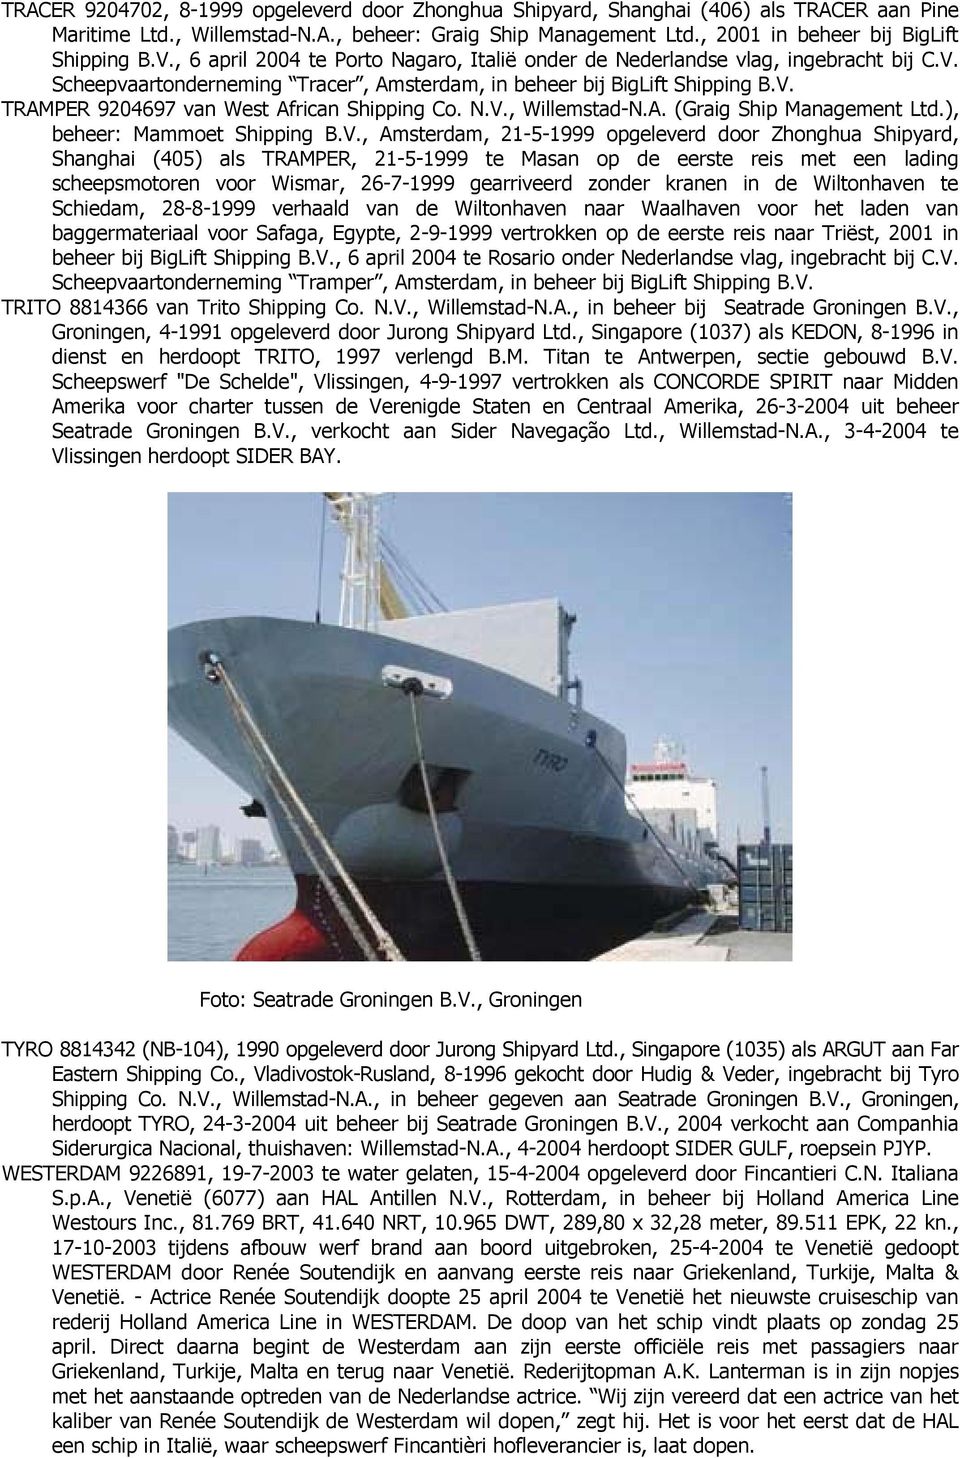 N.V., Willemstad-N.A. (Graig Ship Management Ltd.), beheer: Mammoet Shipping B.V., Amsterdam, 21-5-1999 opgeleverd door Zhonghua Shipyard, Shanghai (405) als TRAMPER, 21-5-1999 te Masan op de eerste